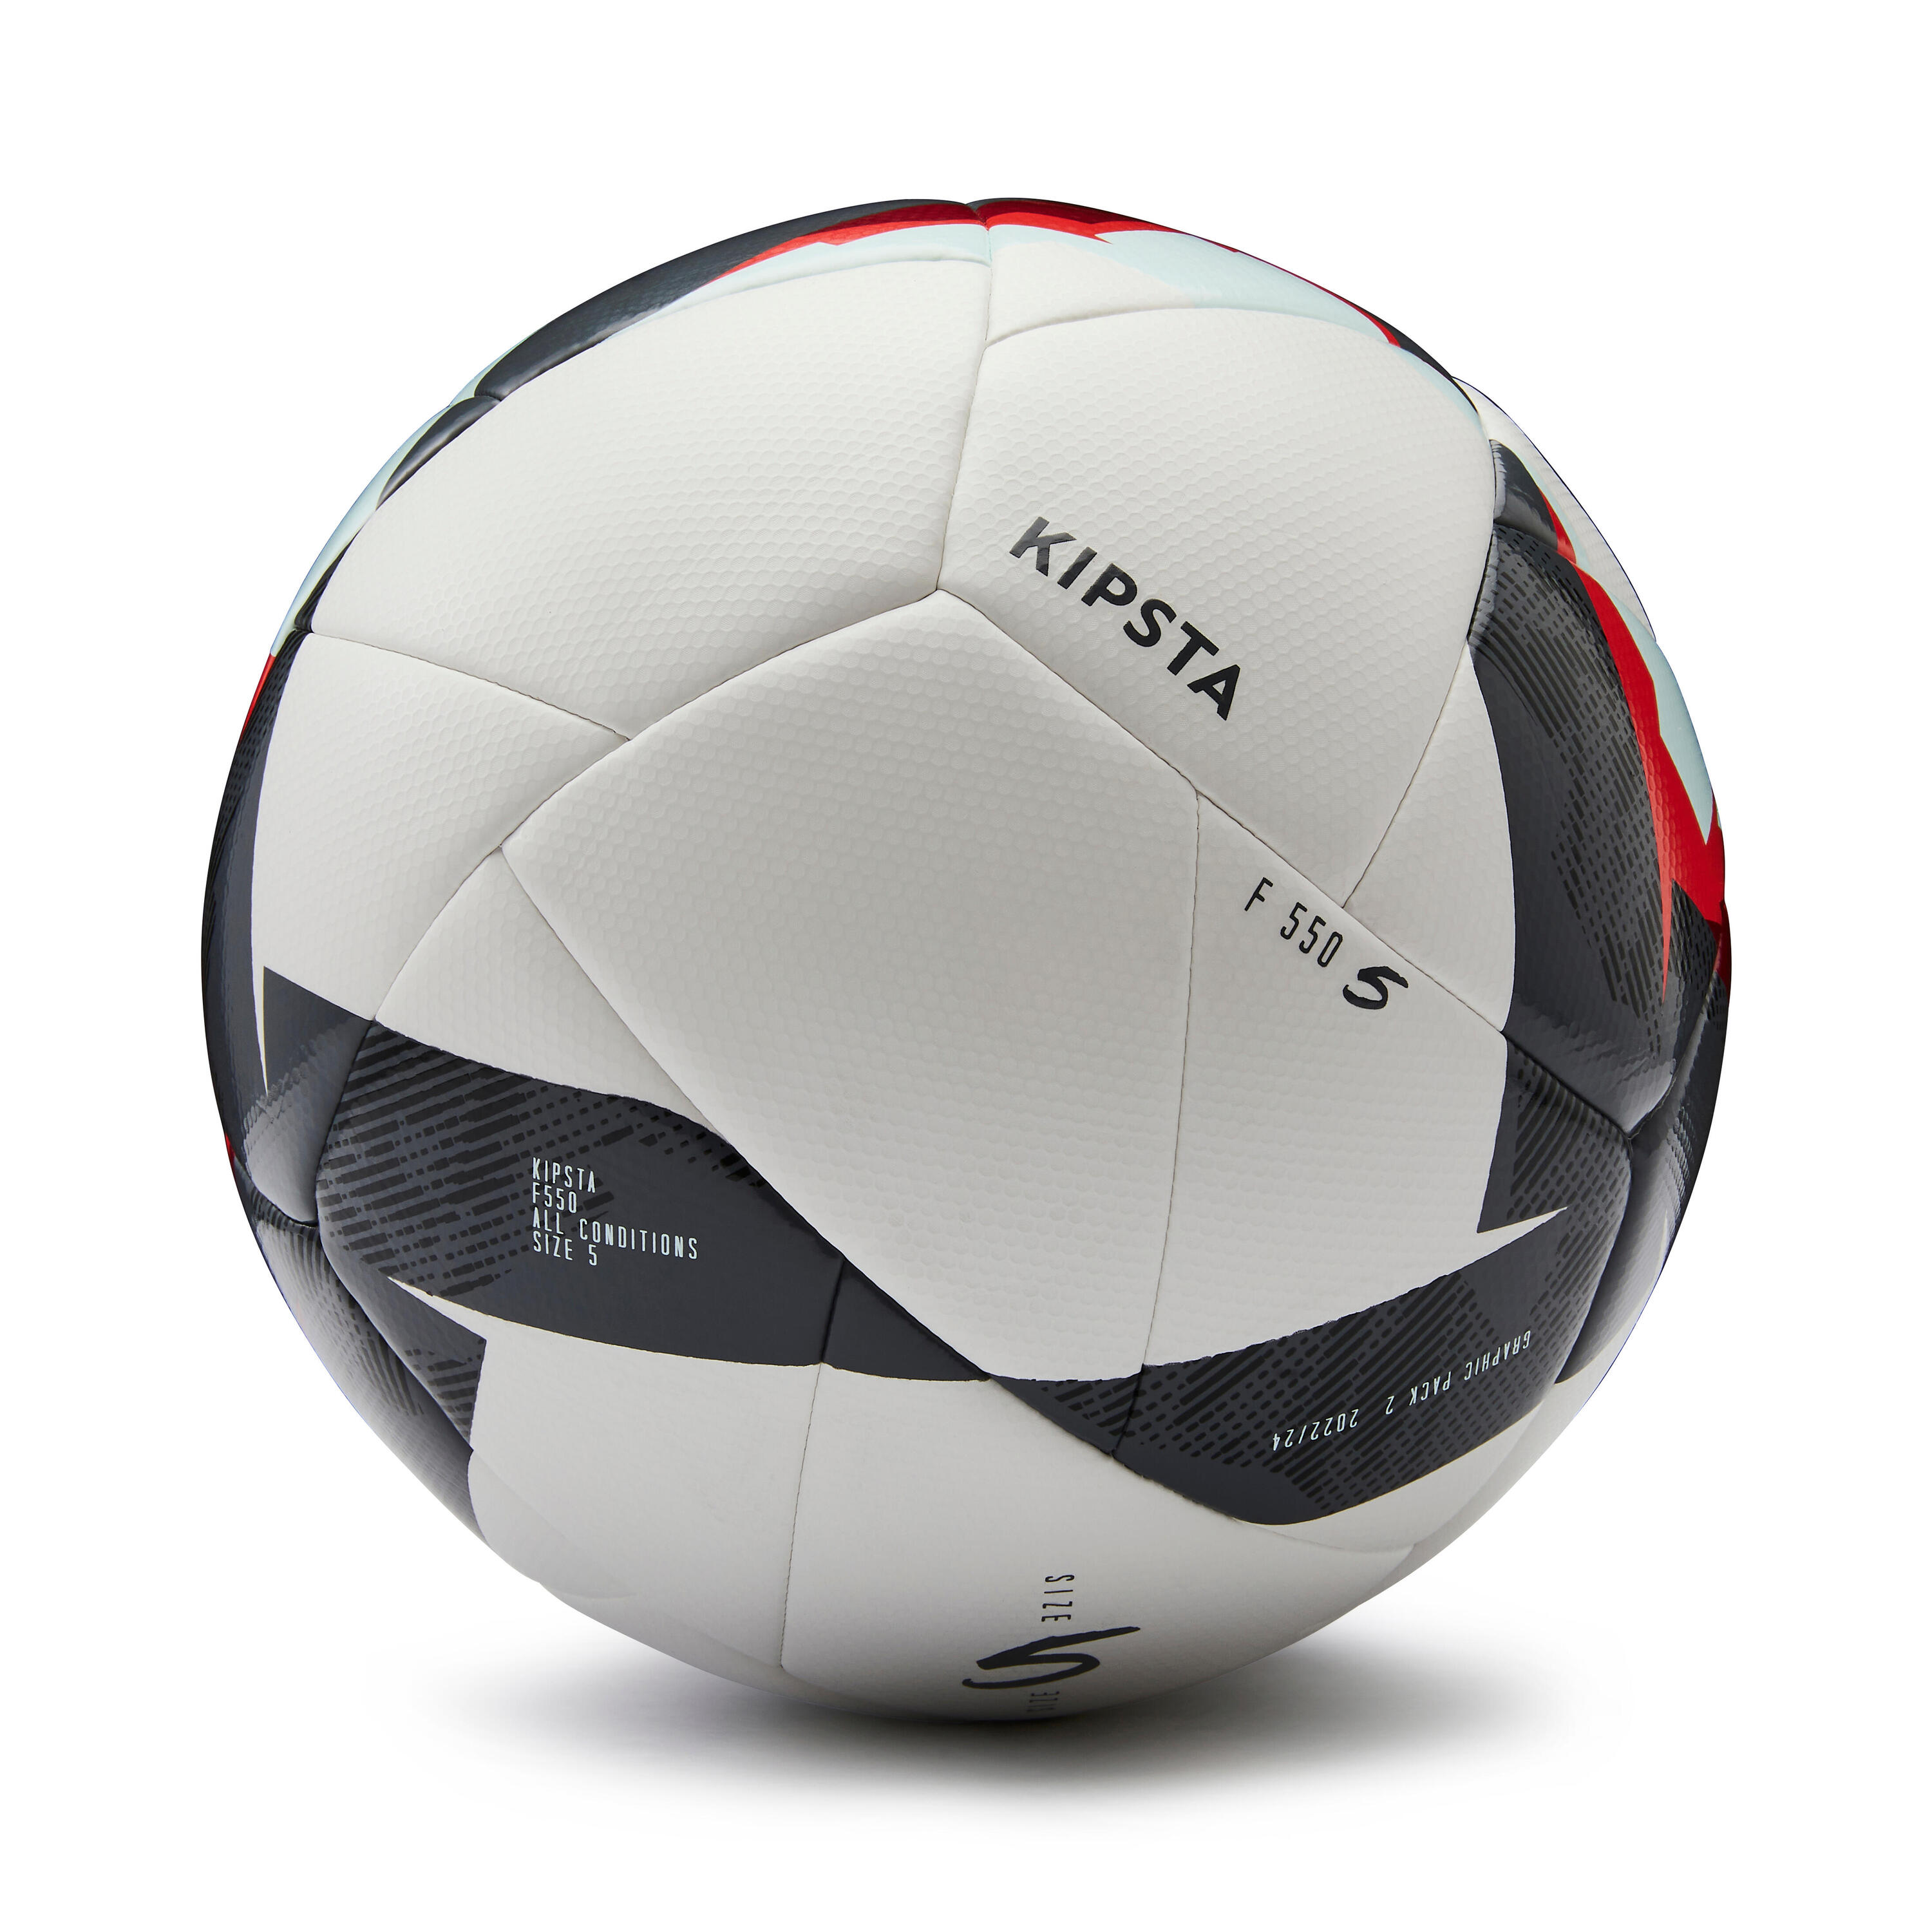 Hybrid Football FIFA Basic F550 Size 5 - White/Red 7/7